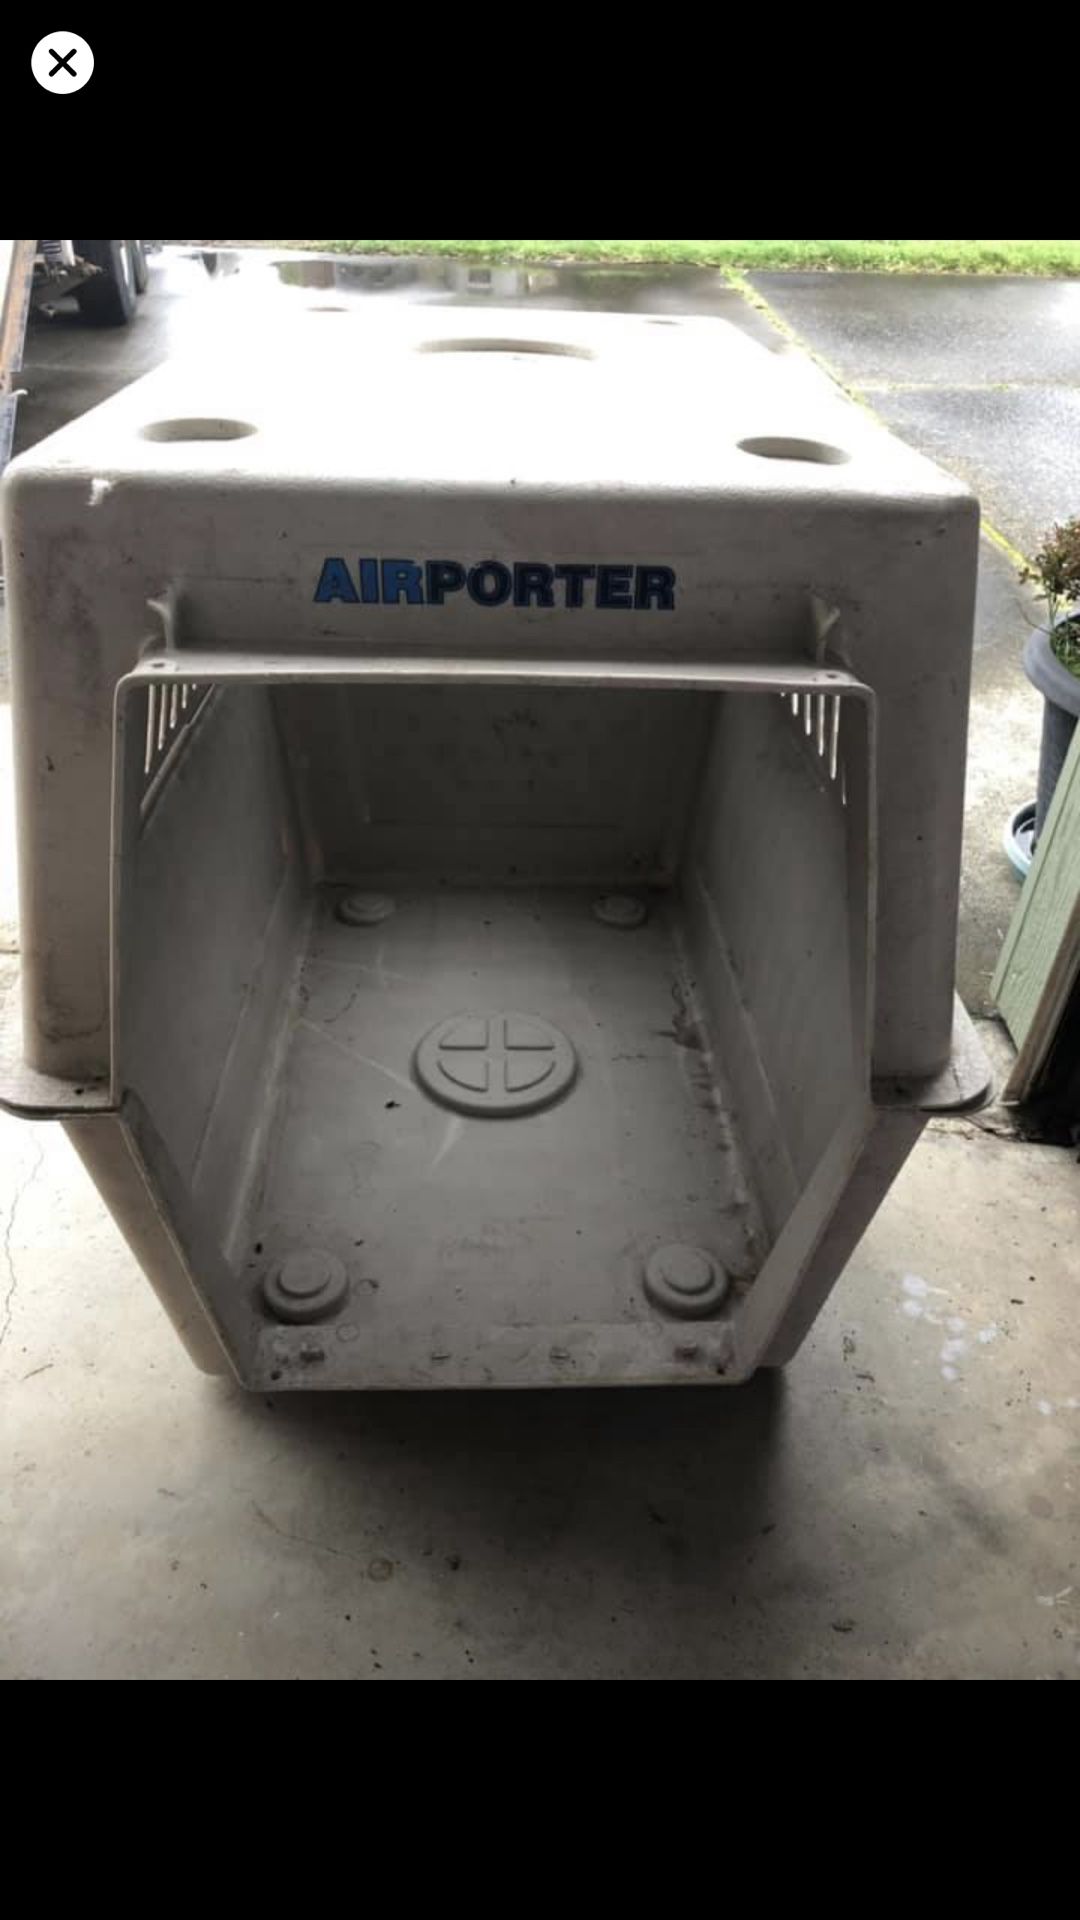 Air porter large animal kennel/transporter without door